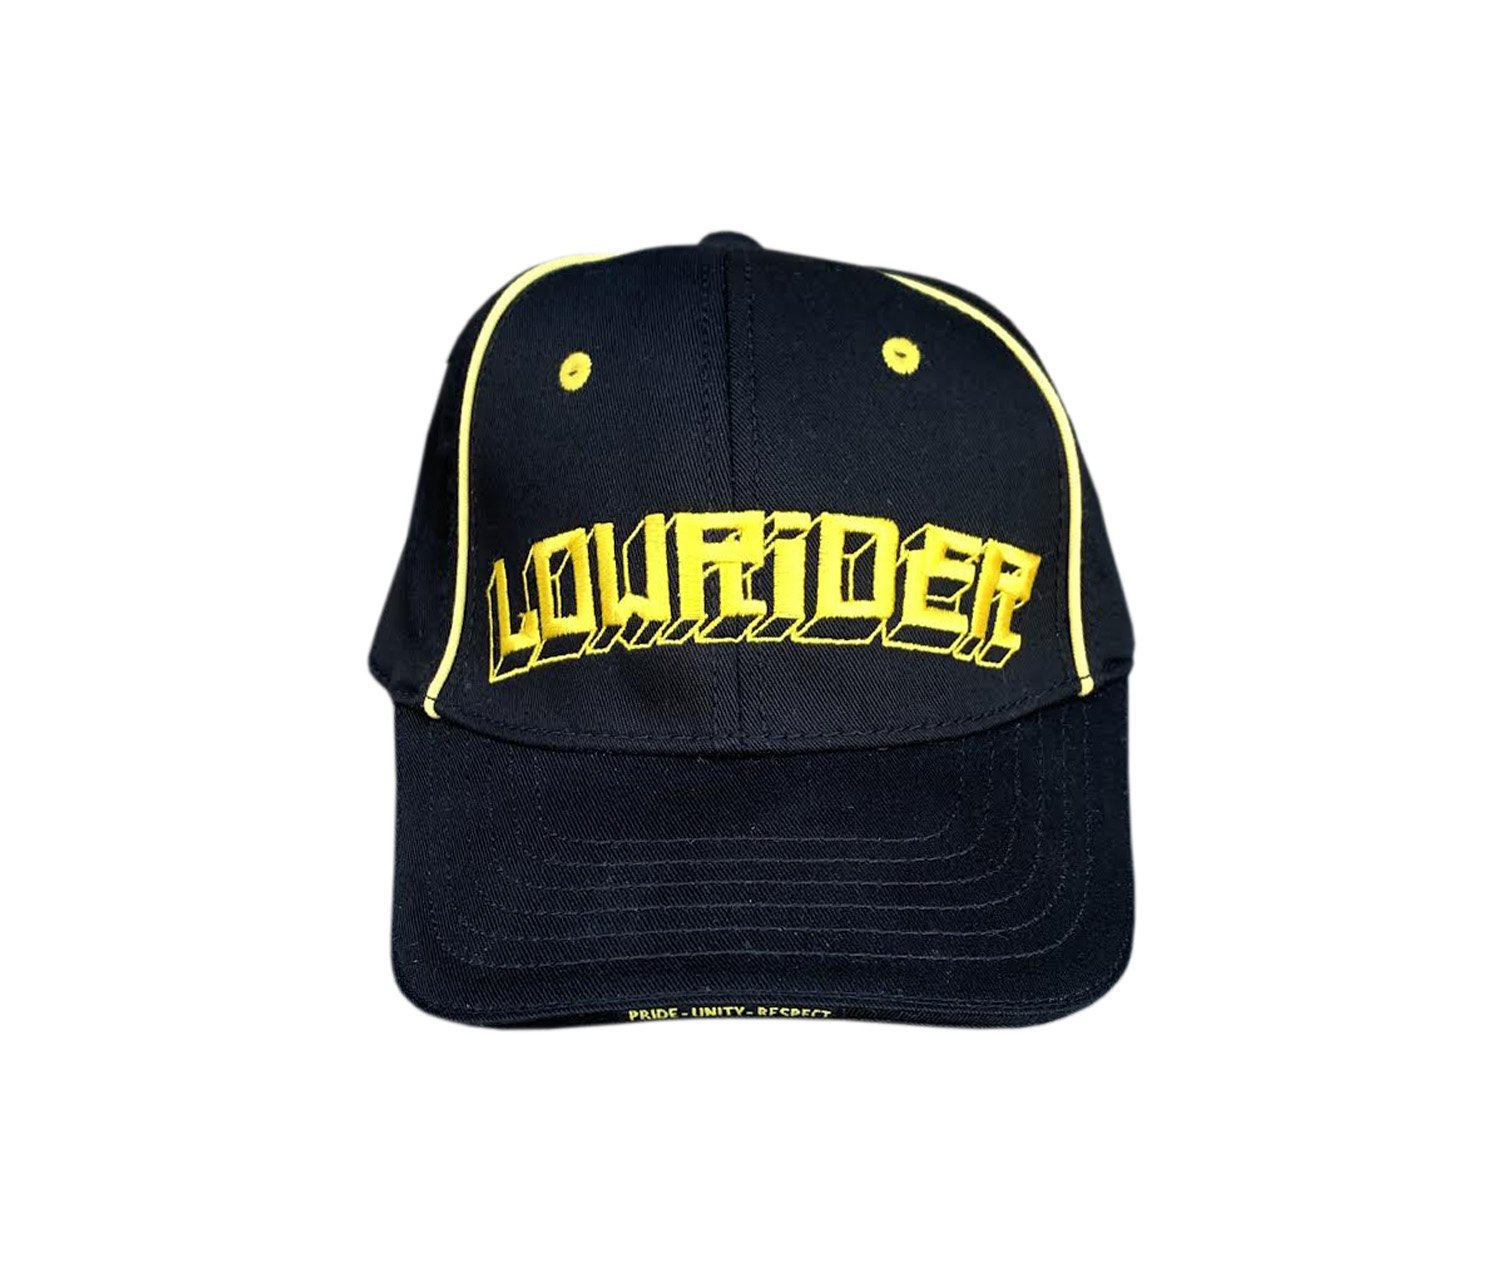 Lowrider Magazine baseball cap 超安い販売中 メンズ | luftechnik.com